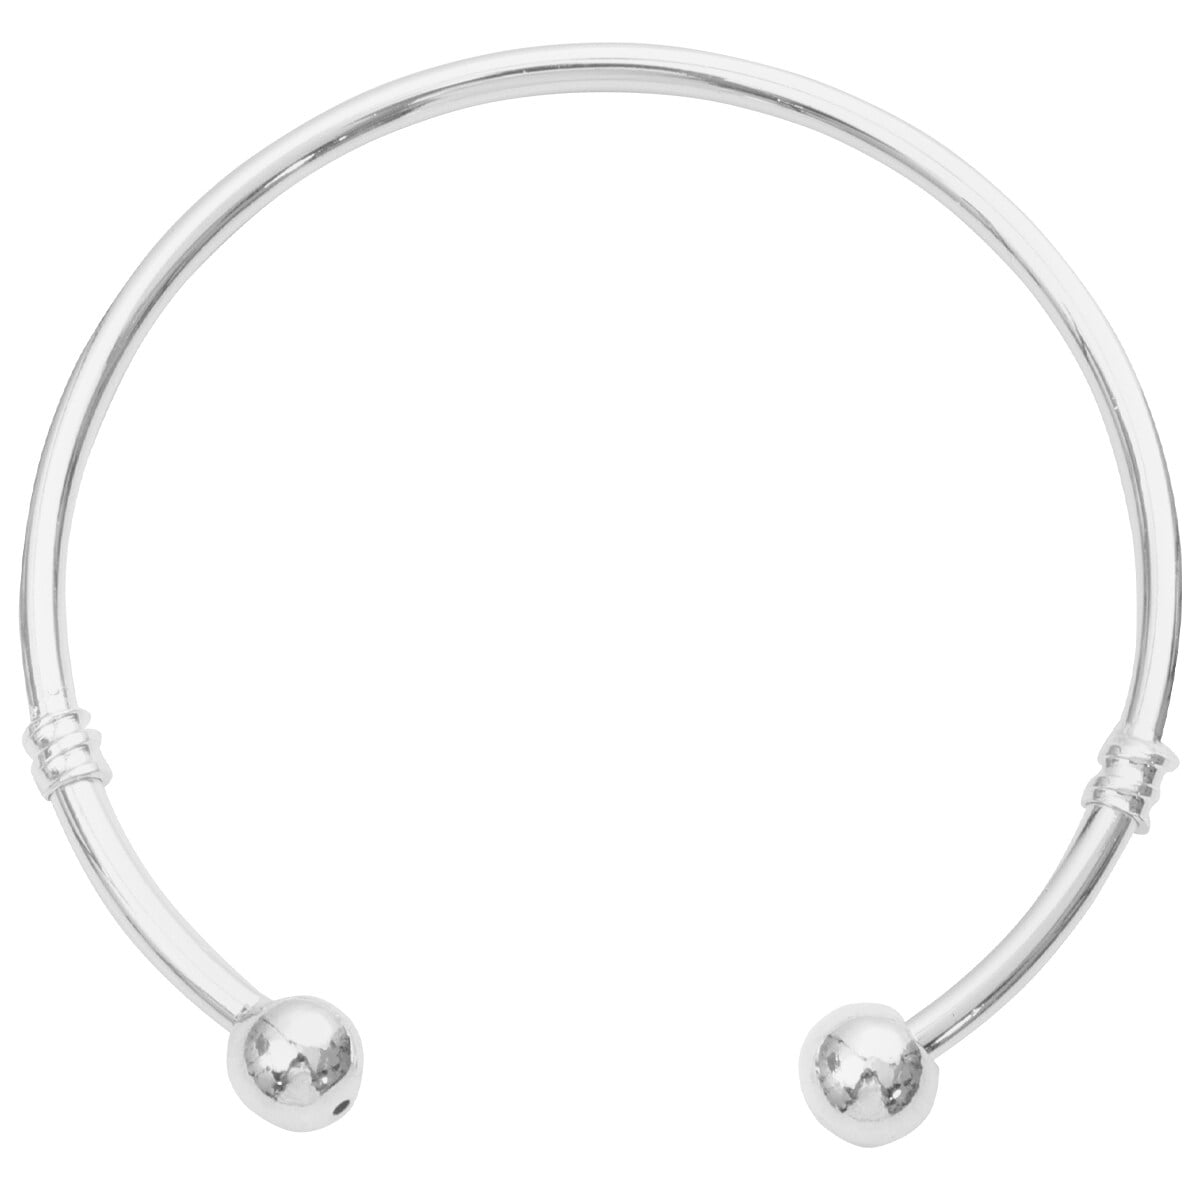 Zonh Women's Charm Bracelet Open Bangle Adjustable Link Chain Sterling ...